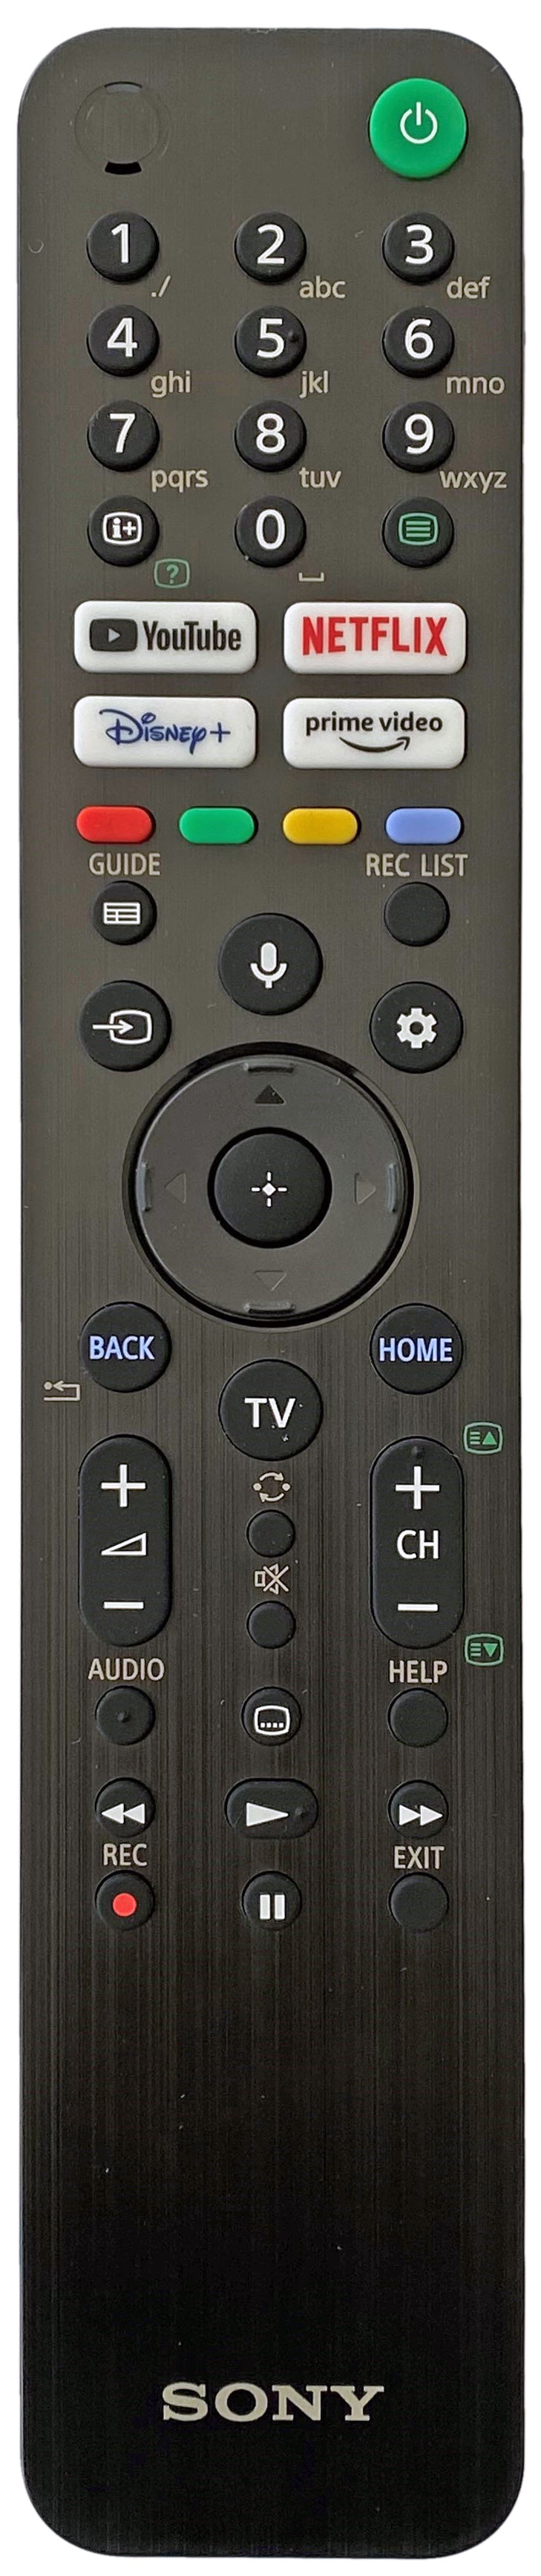 SONY 1-009-953-21 Remote Control Original